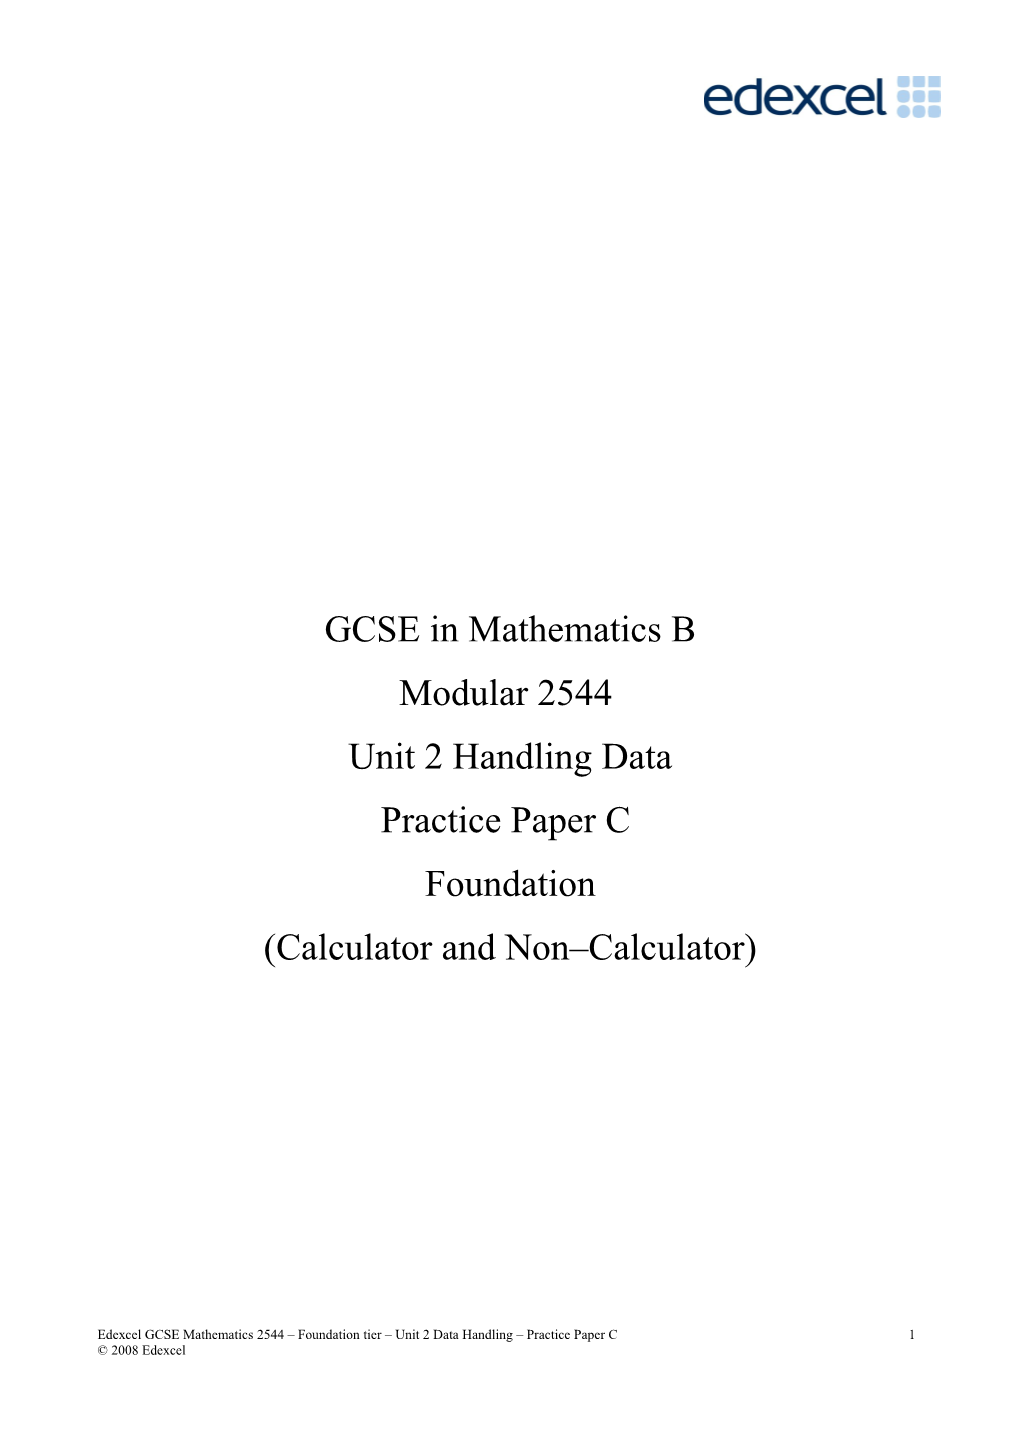 Unit 2 Foundation Paper C Section a Non-Calculator